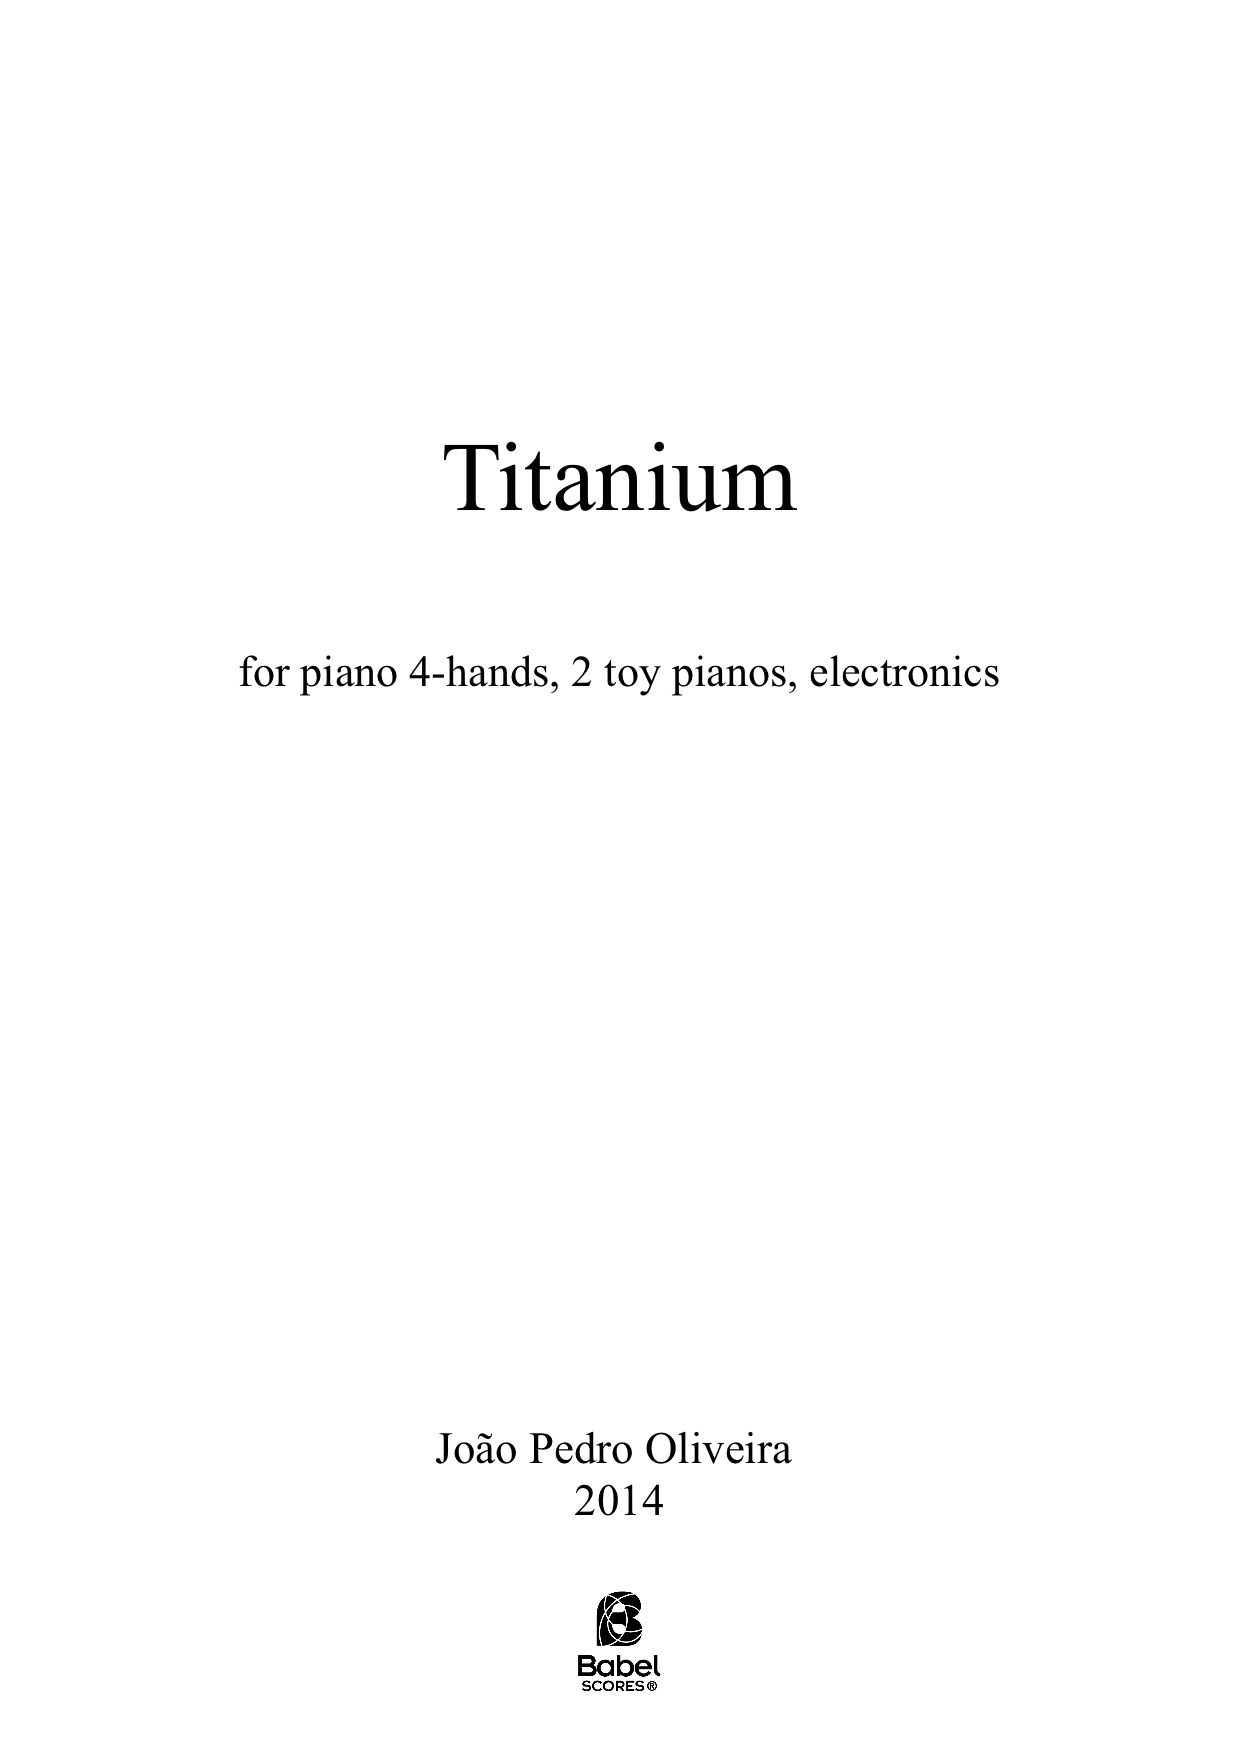 Titanium score final A4 z 2 1 537